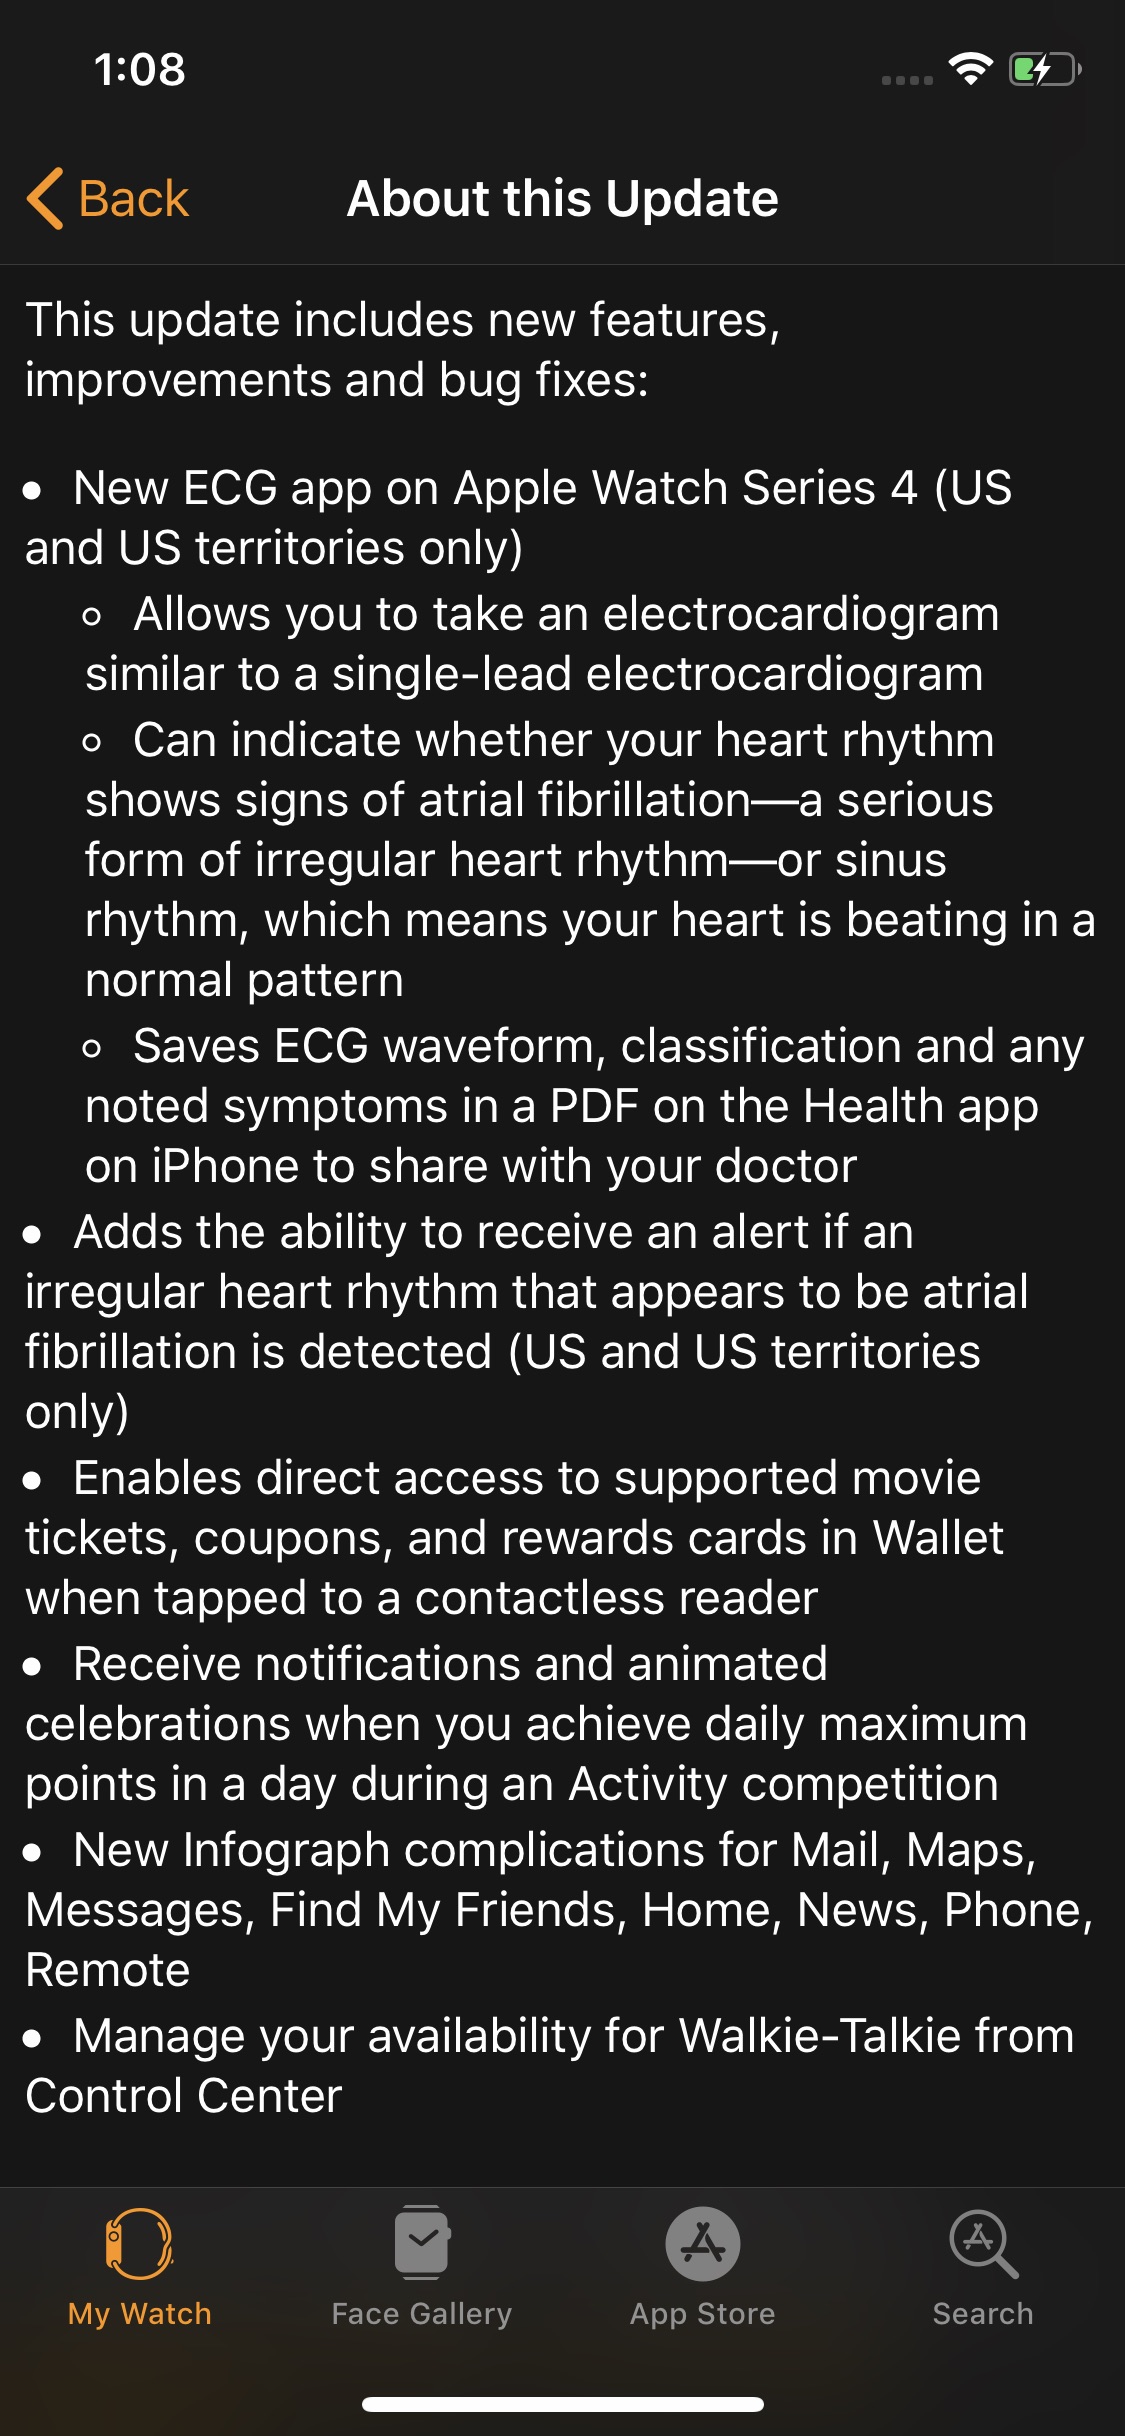 Apple Releases watchOS 5.1.2 With ECG App, Irregular Heart Rhythm Alerts, More